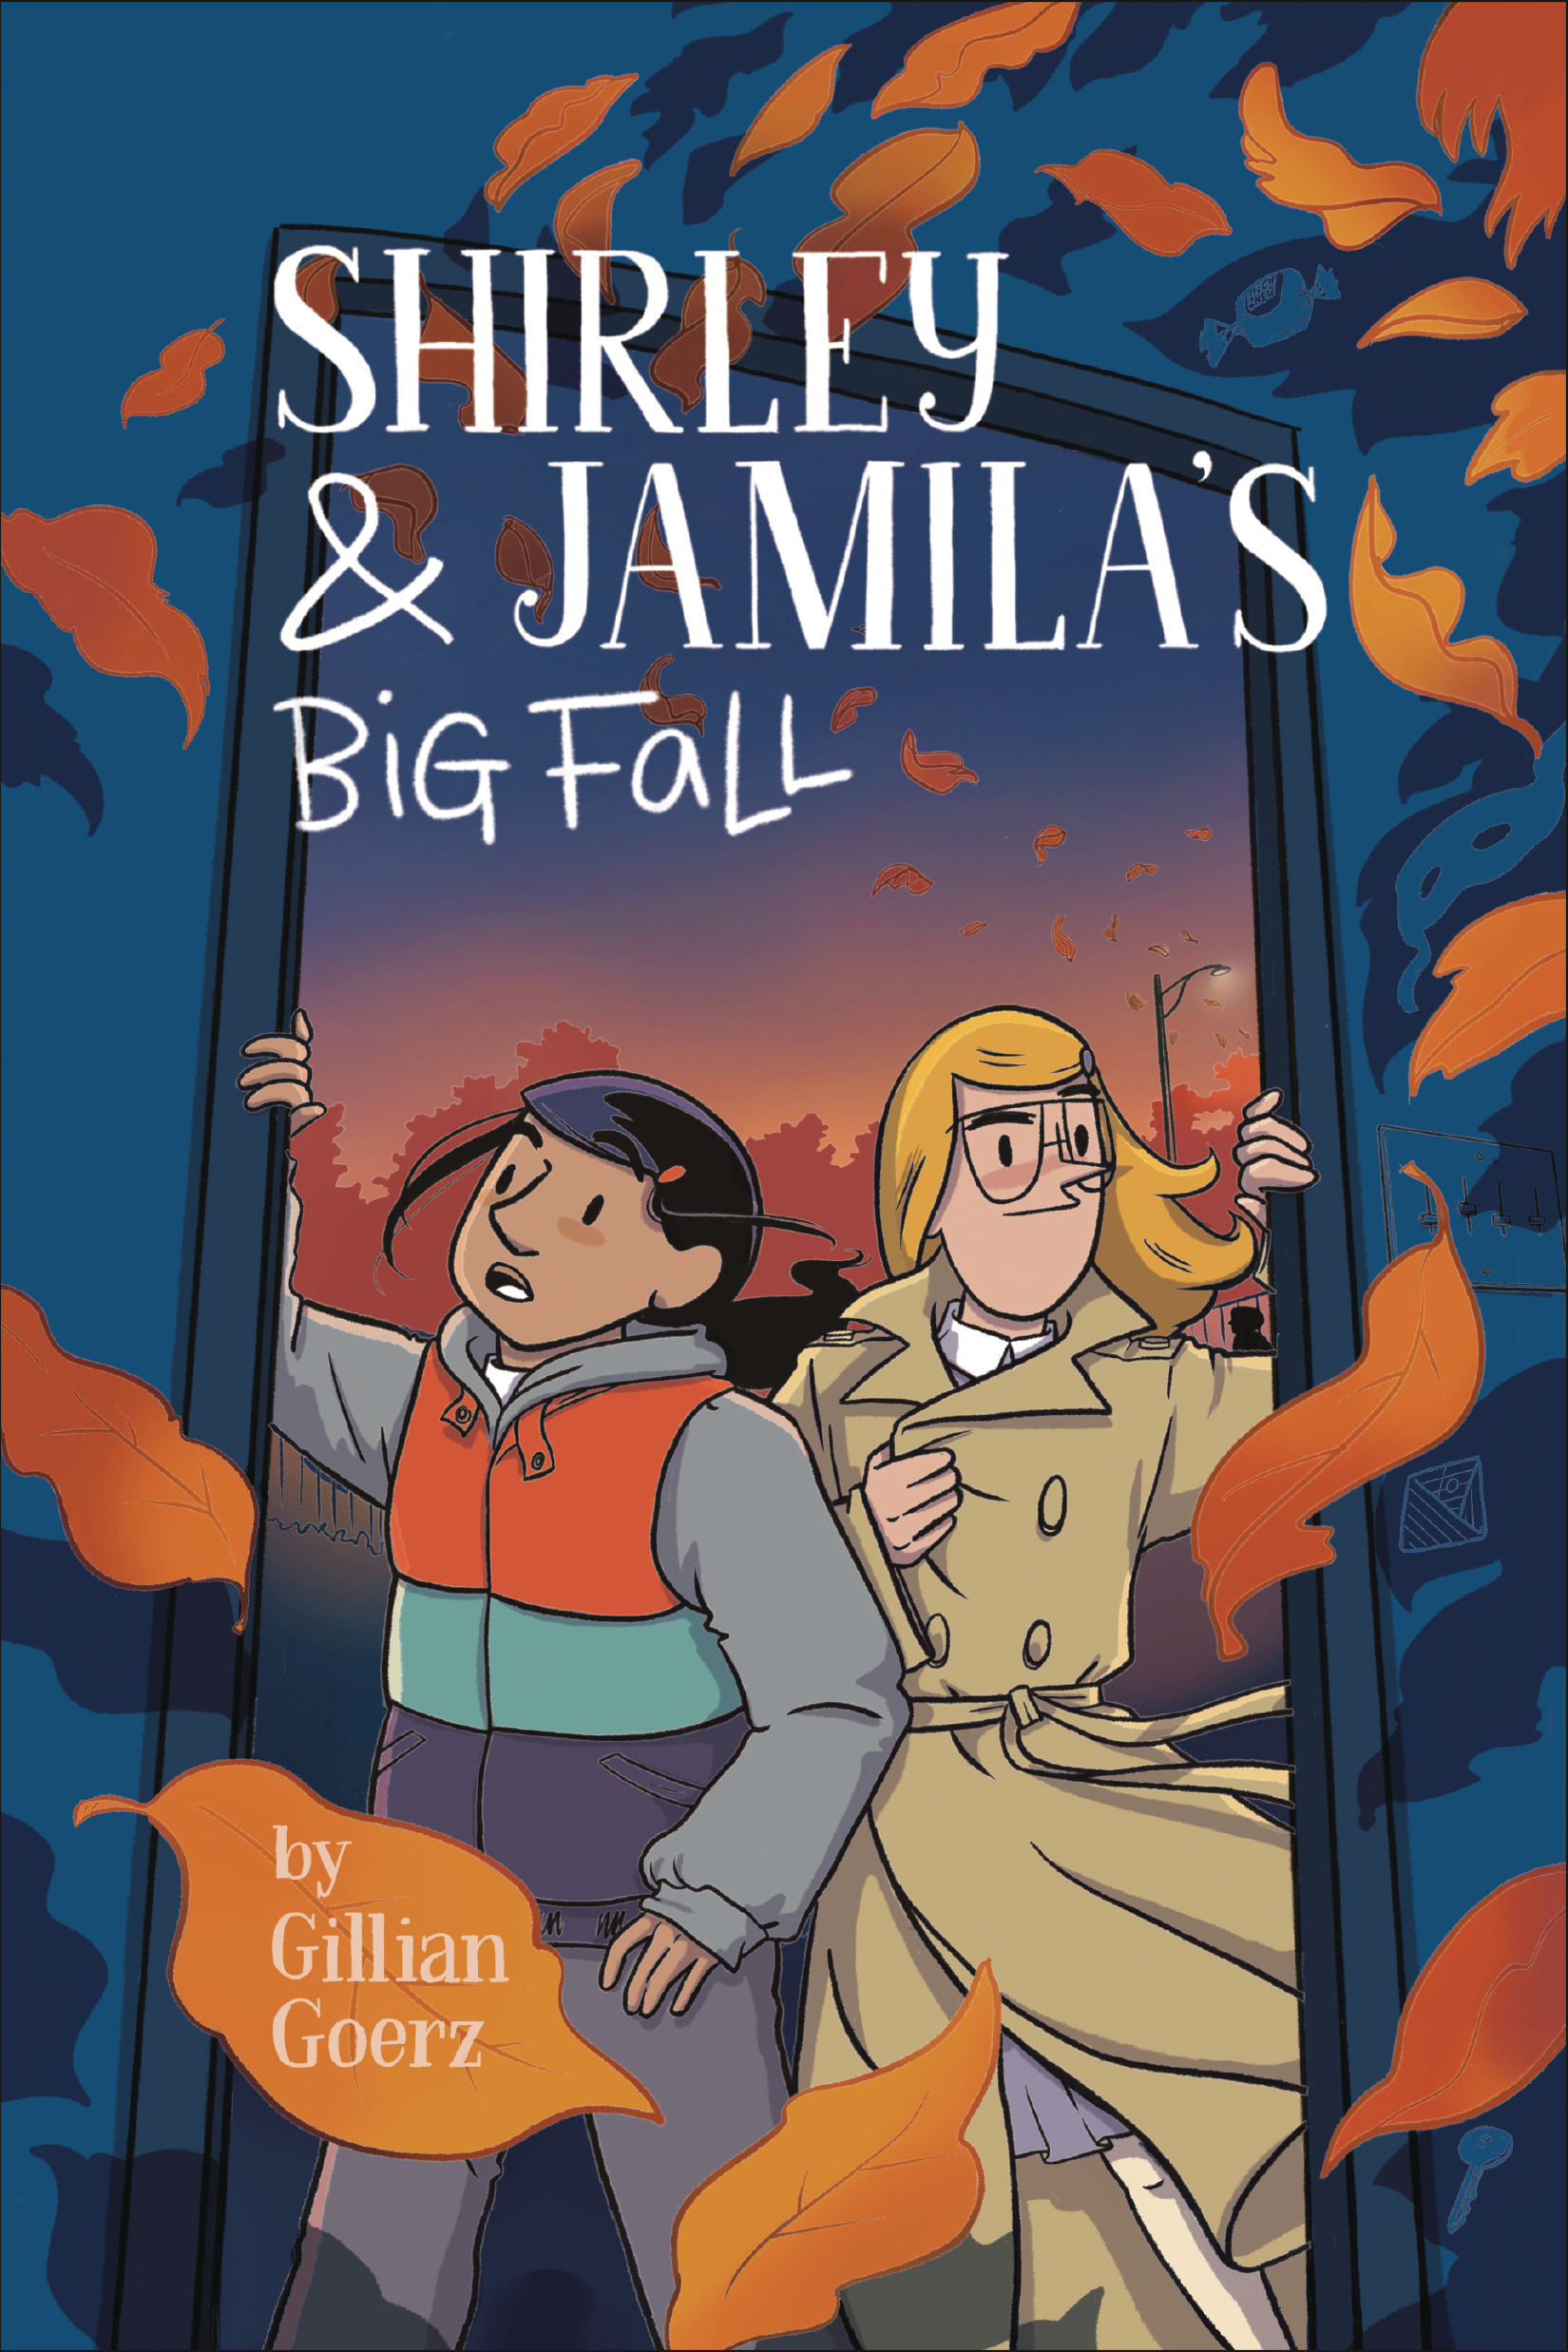 Shirley & Jamilas Big Fall Hardcover Graphic Novel